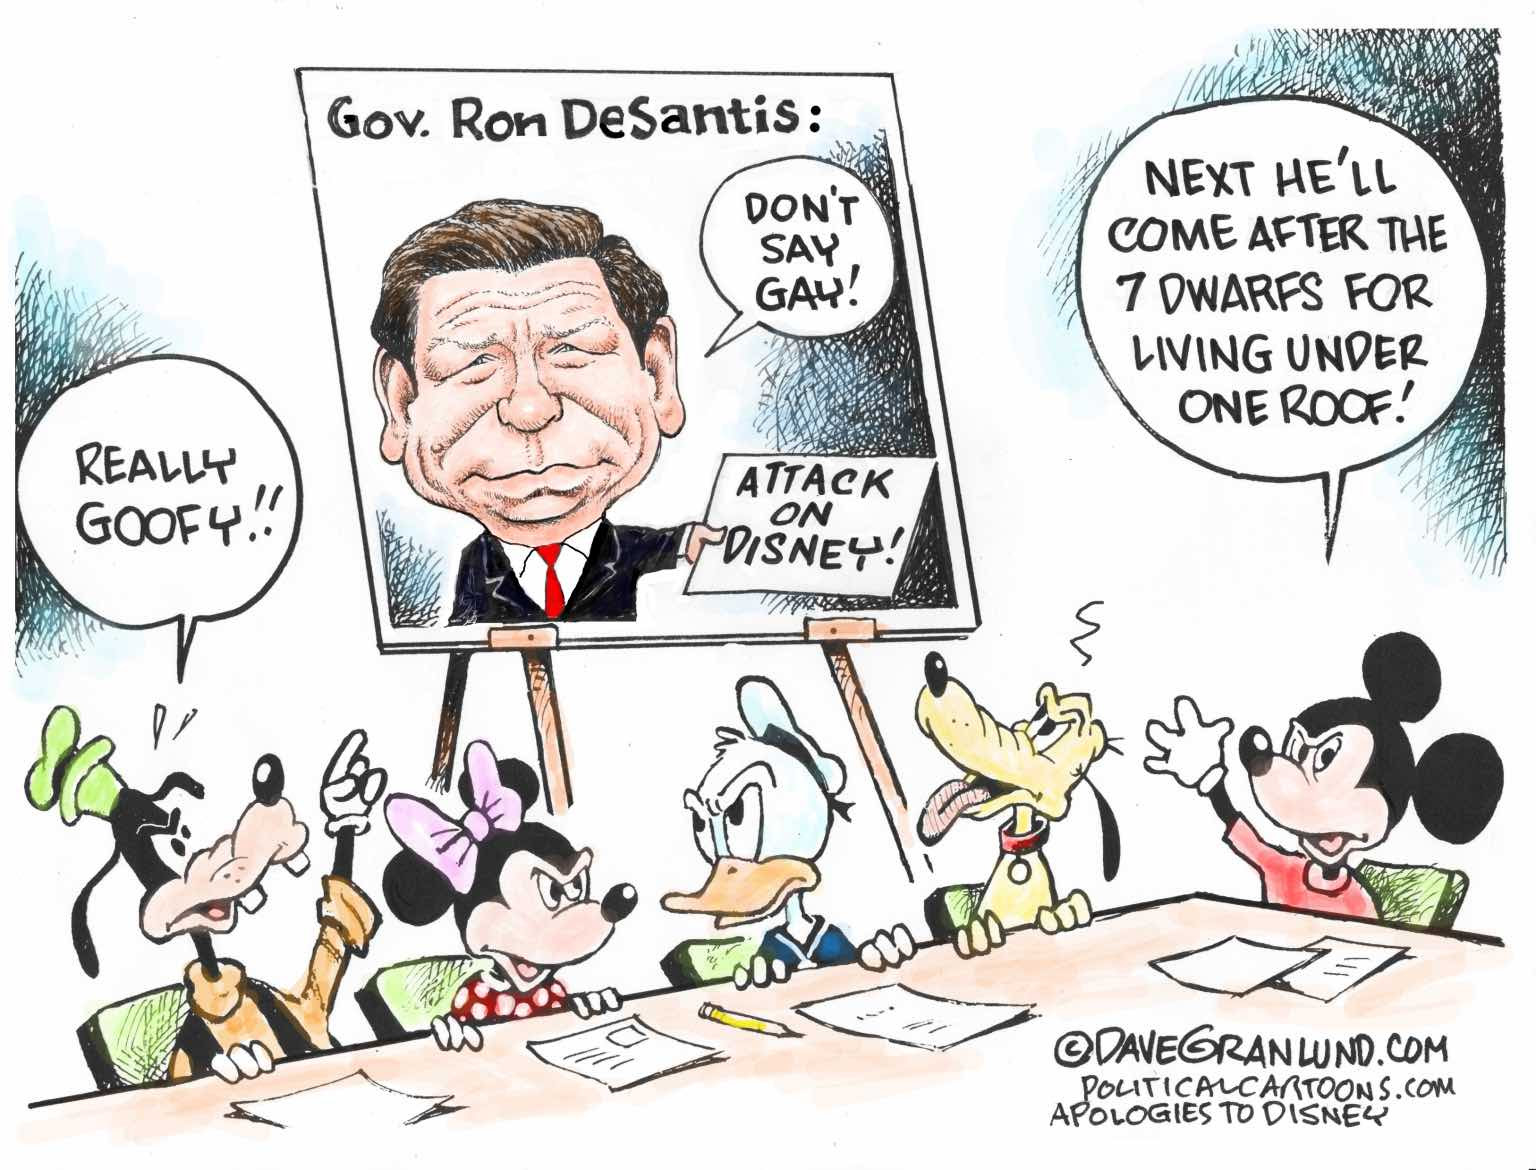 DeSantis bullies corporations like Disney to push his agenda.